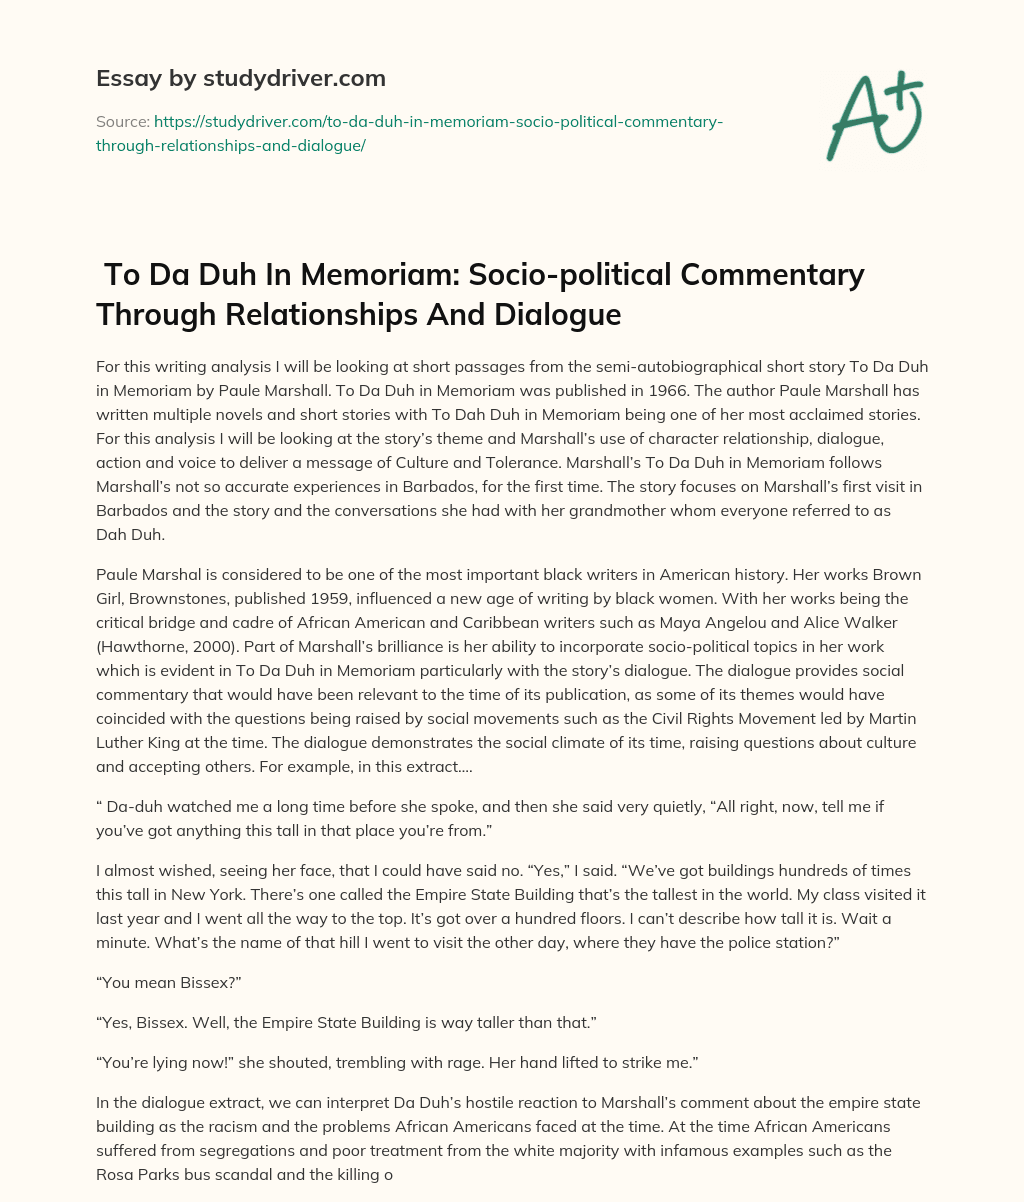  To Da Duh in Memoriam: Socio-political Commentary through Relationships and Dialogue essay